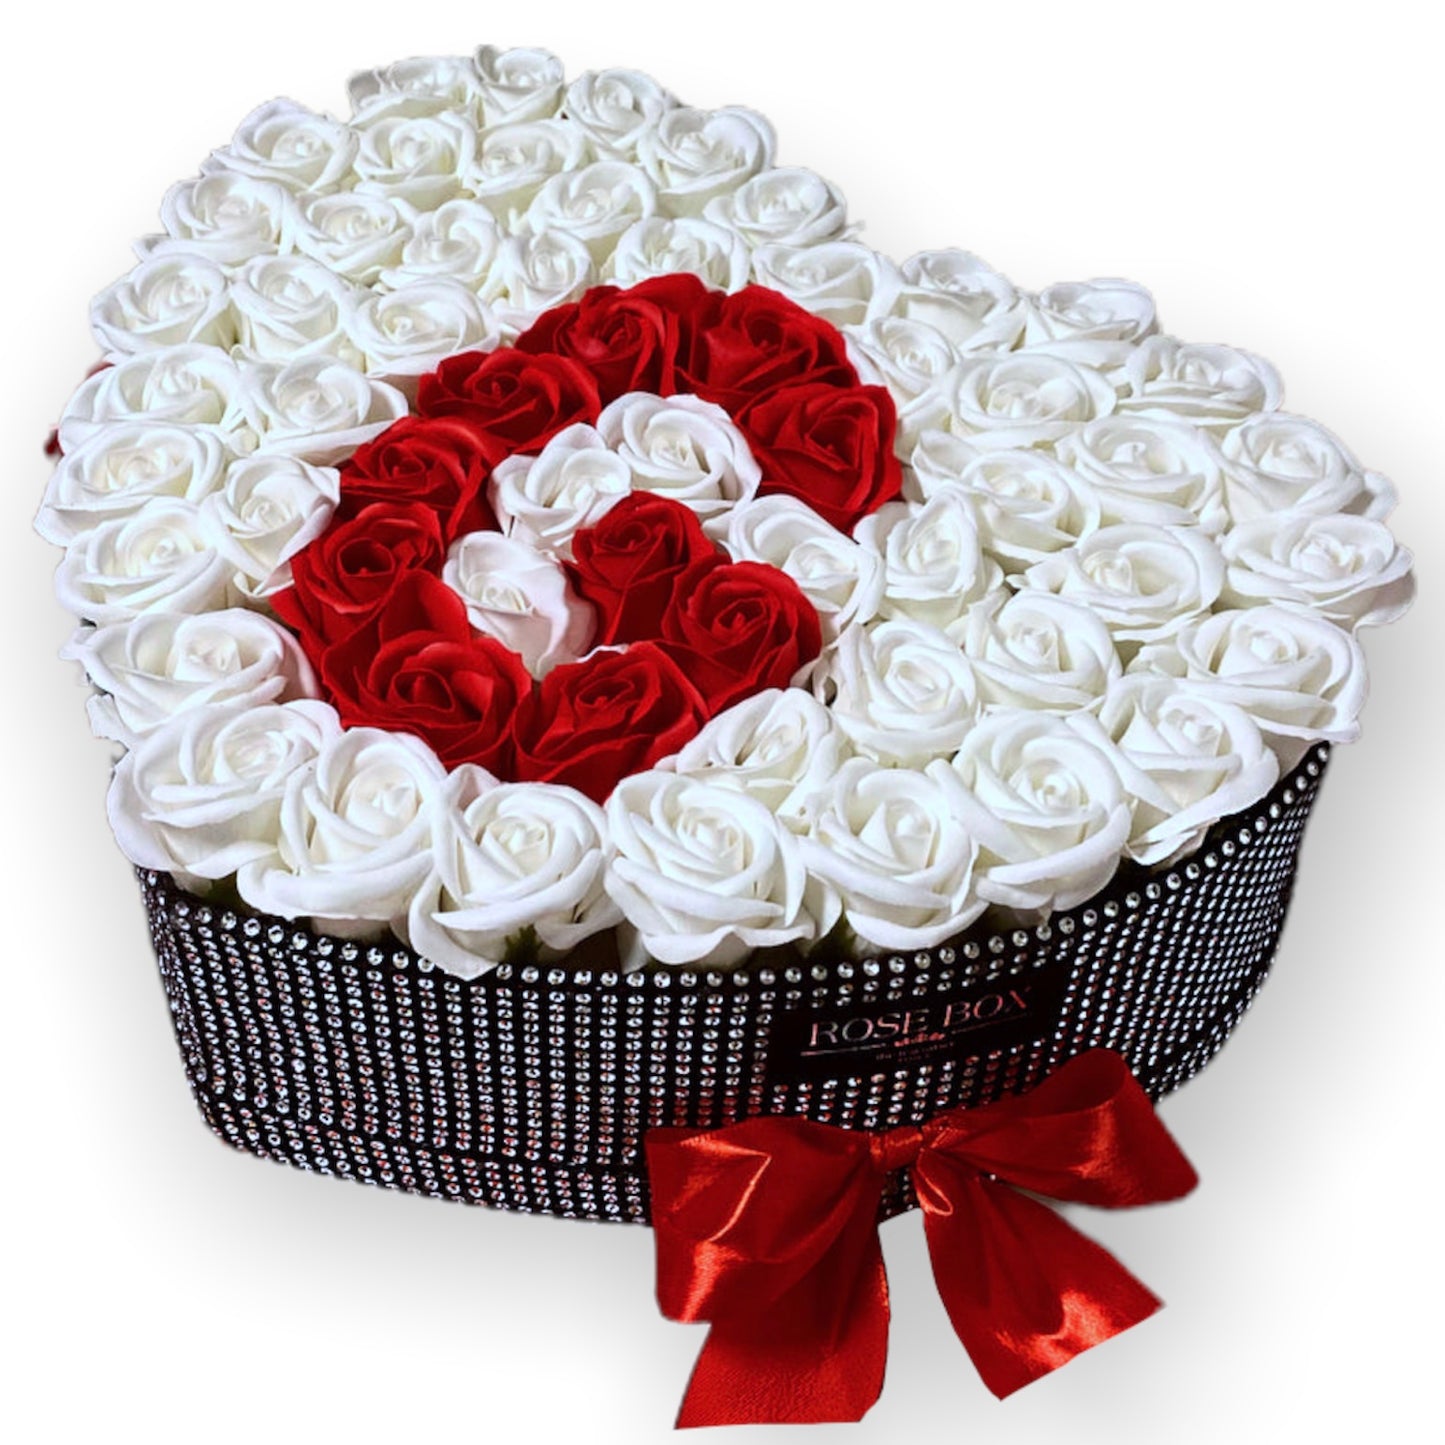 Cutie inimă cu cristale și 51 trandafiri roșu&alb personalizată